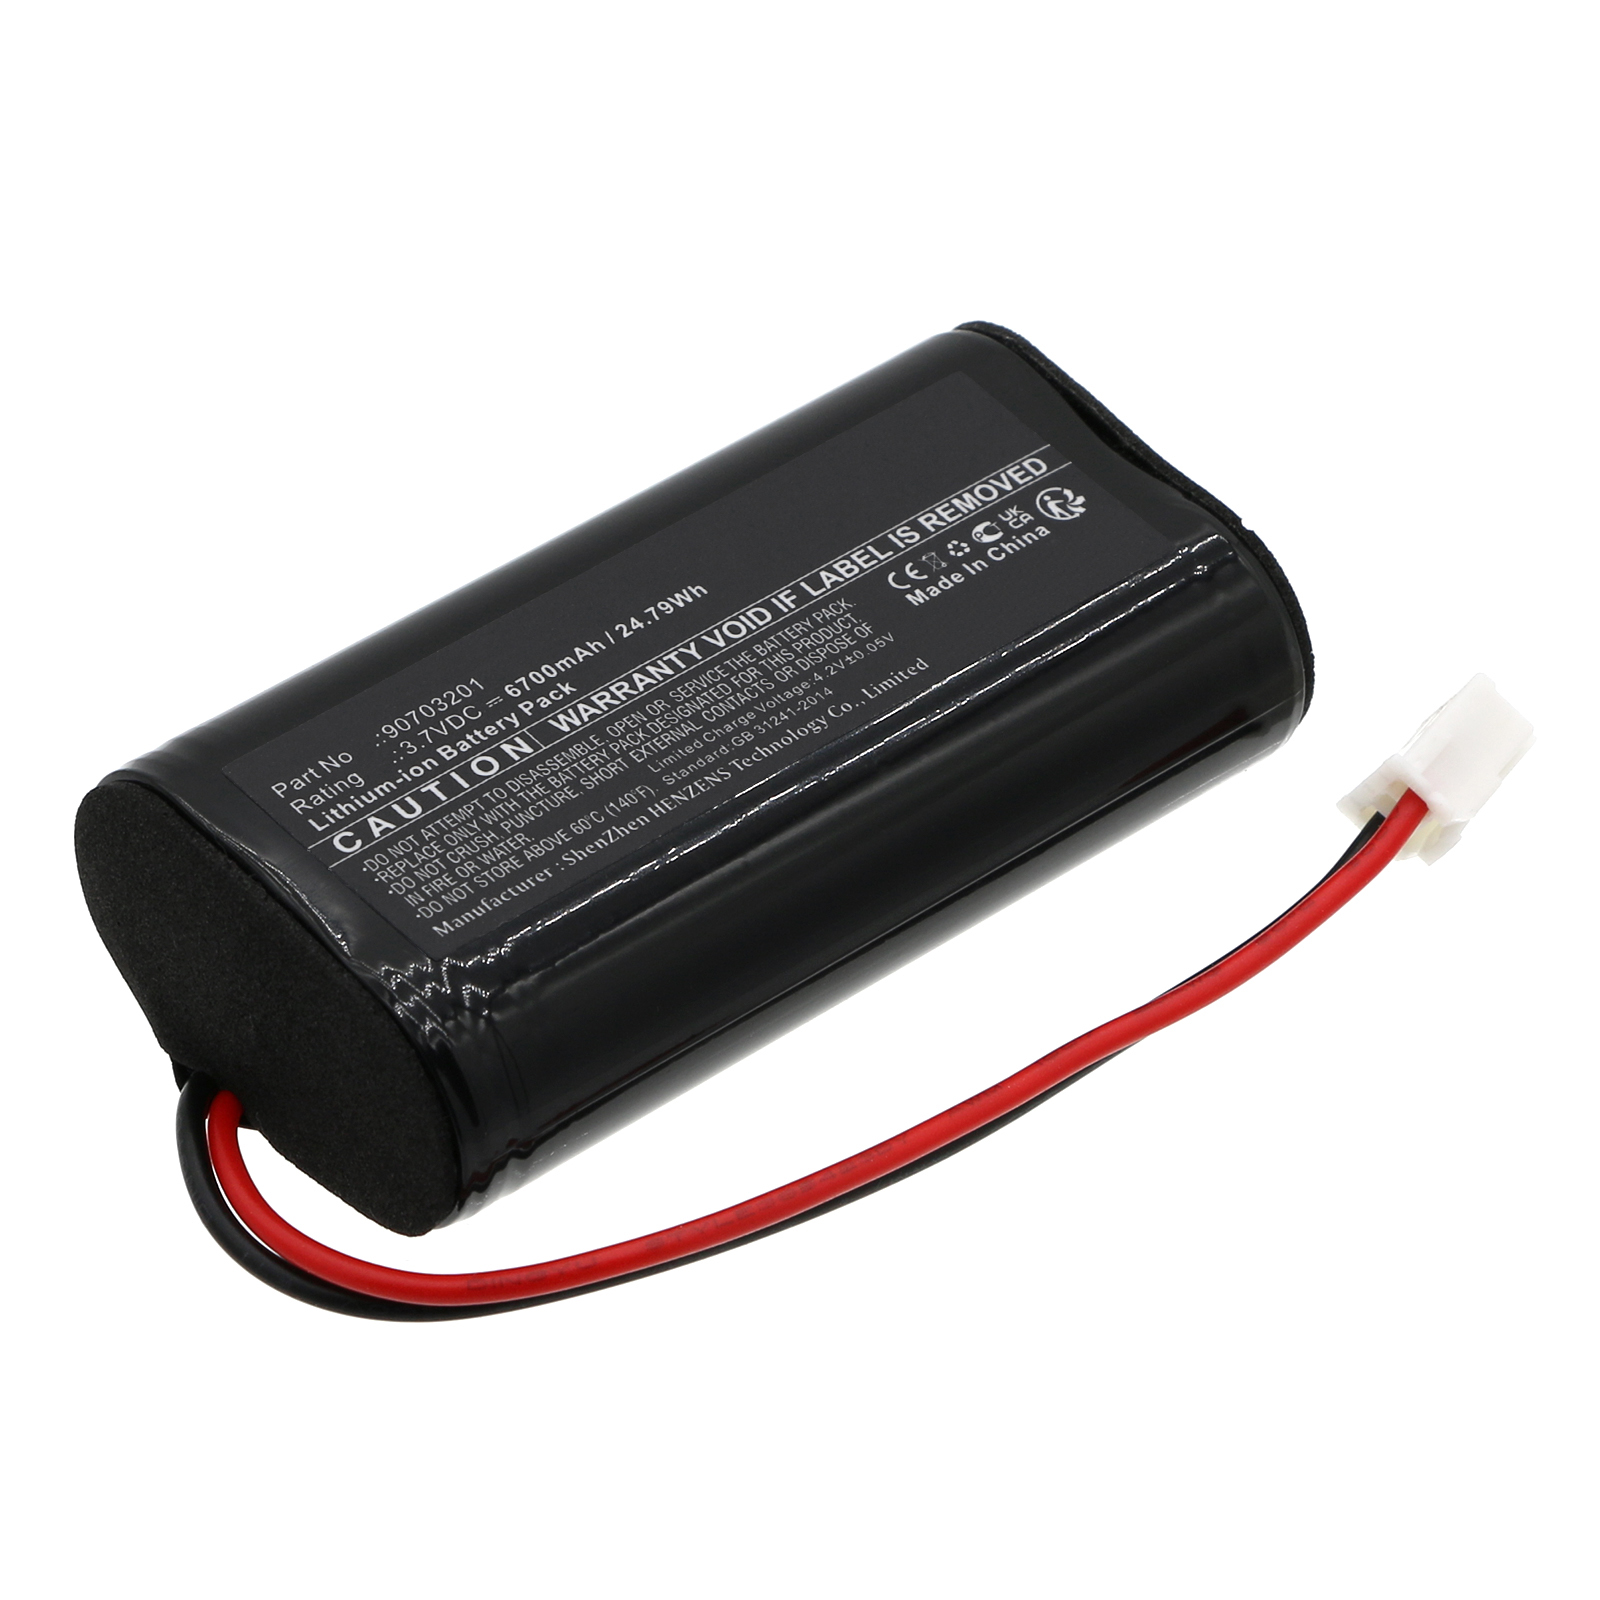 Synergy Digital Flashlight Battery, Compatible with ADARO 90703201 Flashlight Battery (Li-ion, 3.7V, 6700mAh)